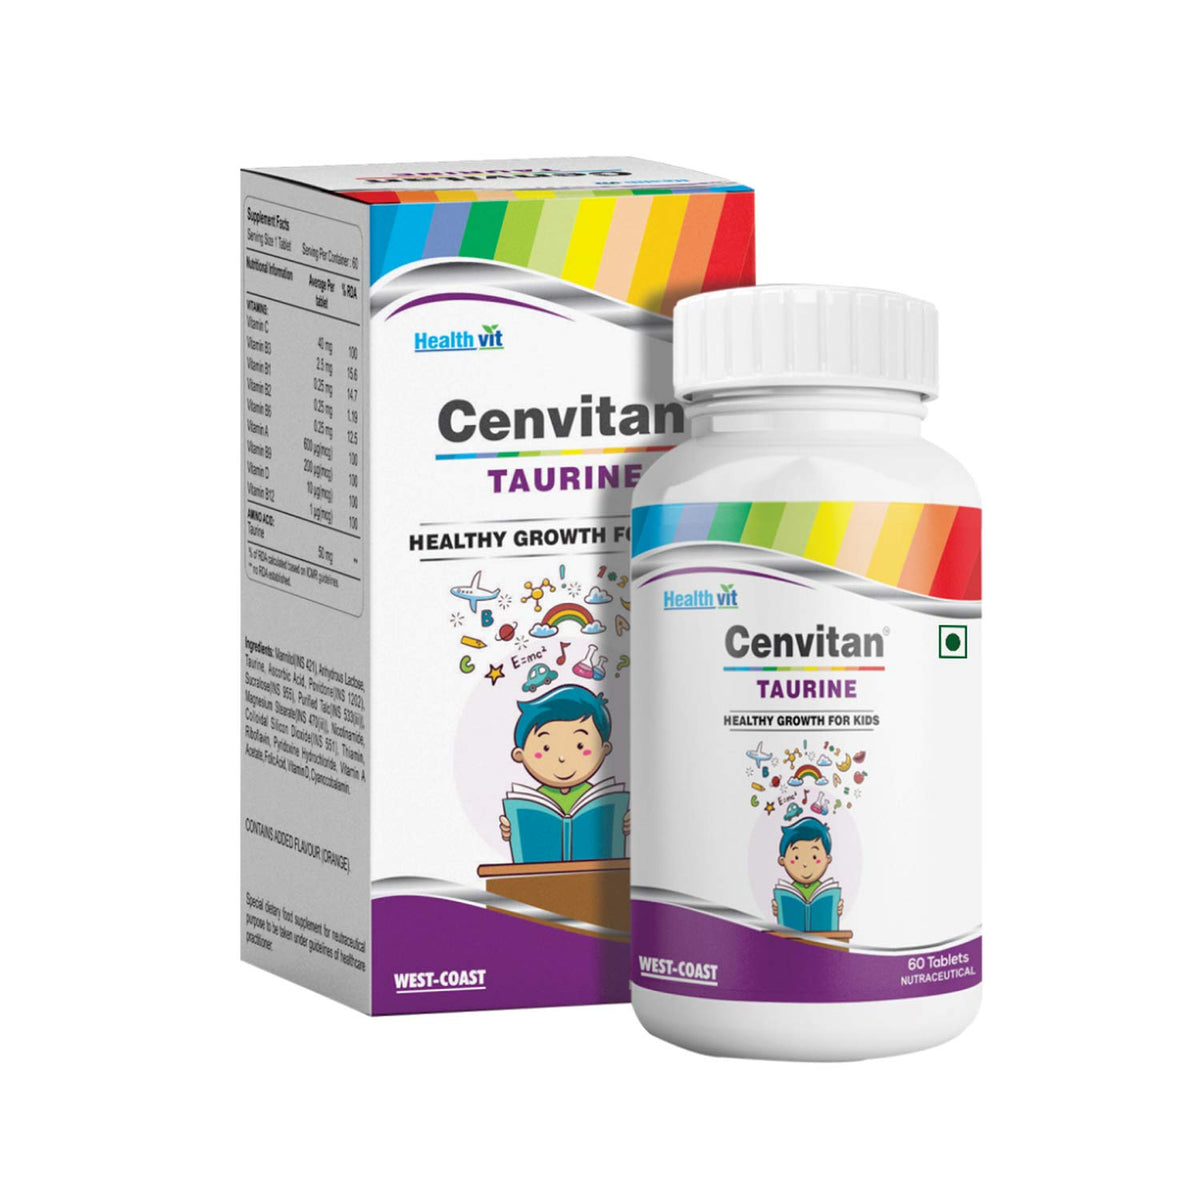 Healthvit Cenvitan Taurine Healthy Growth for Kids - 60 Tablets